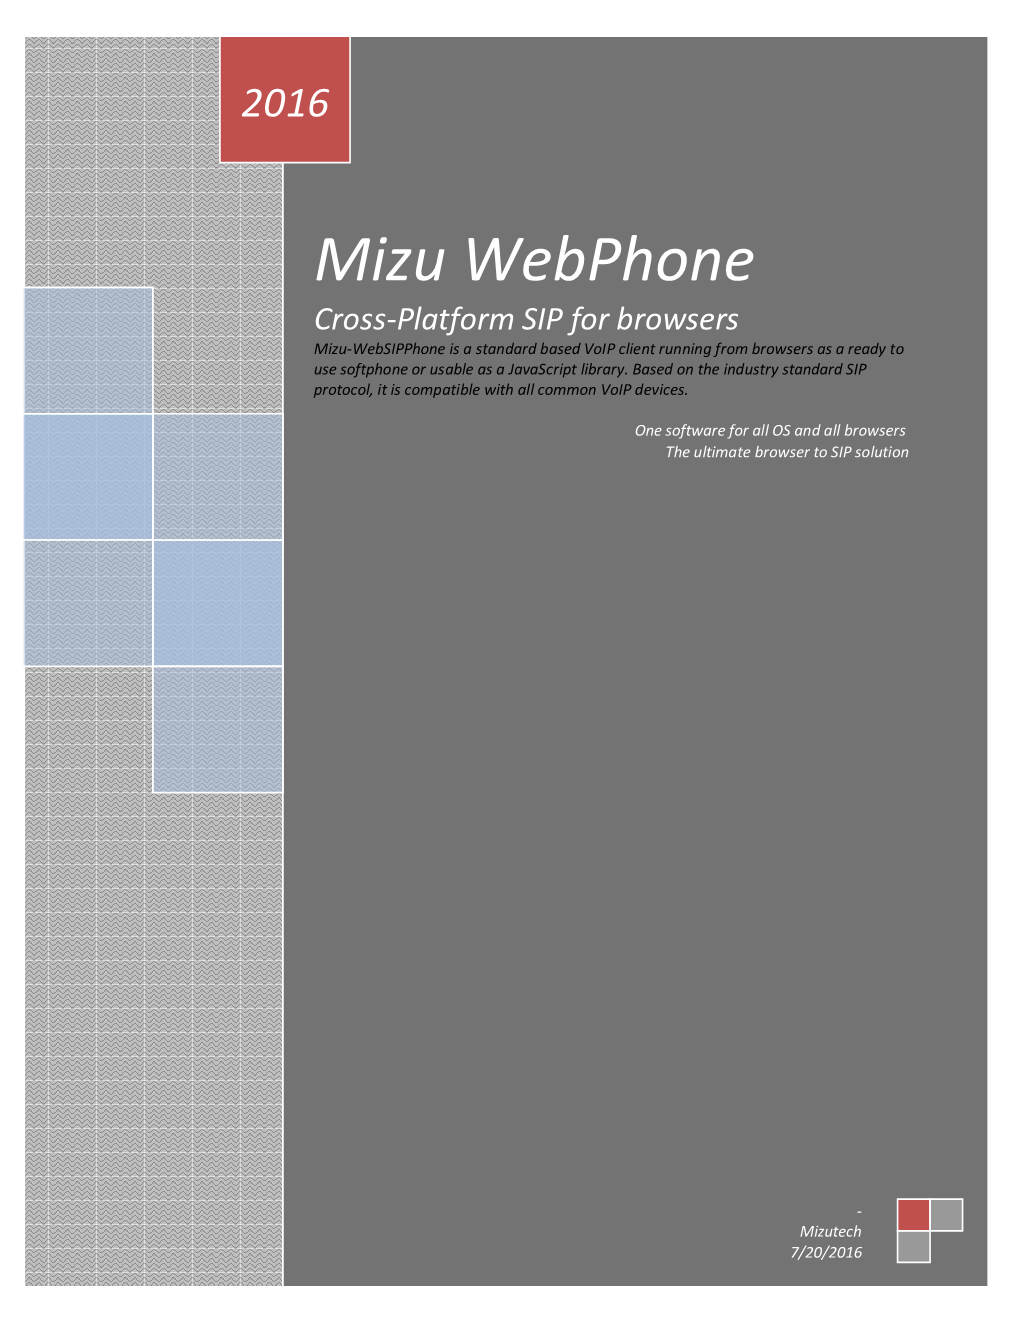 Mizu Webphone